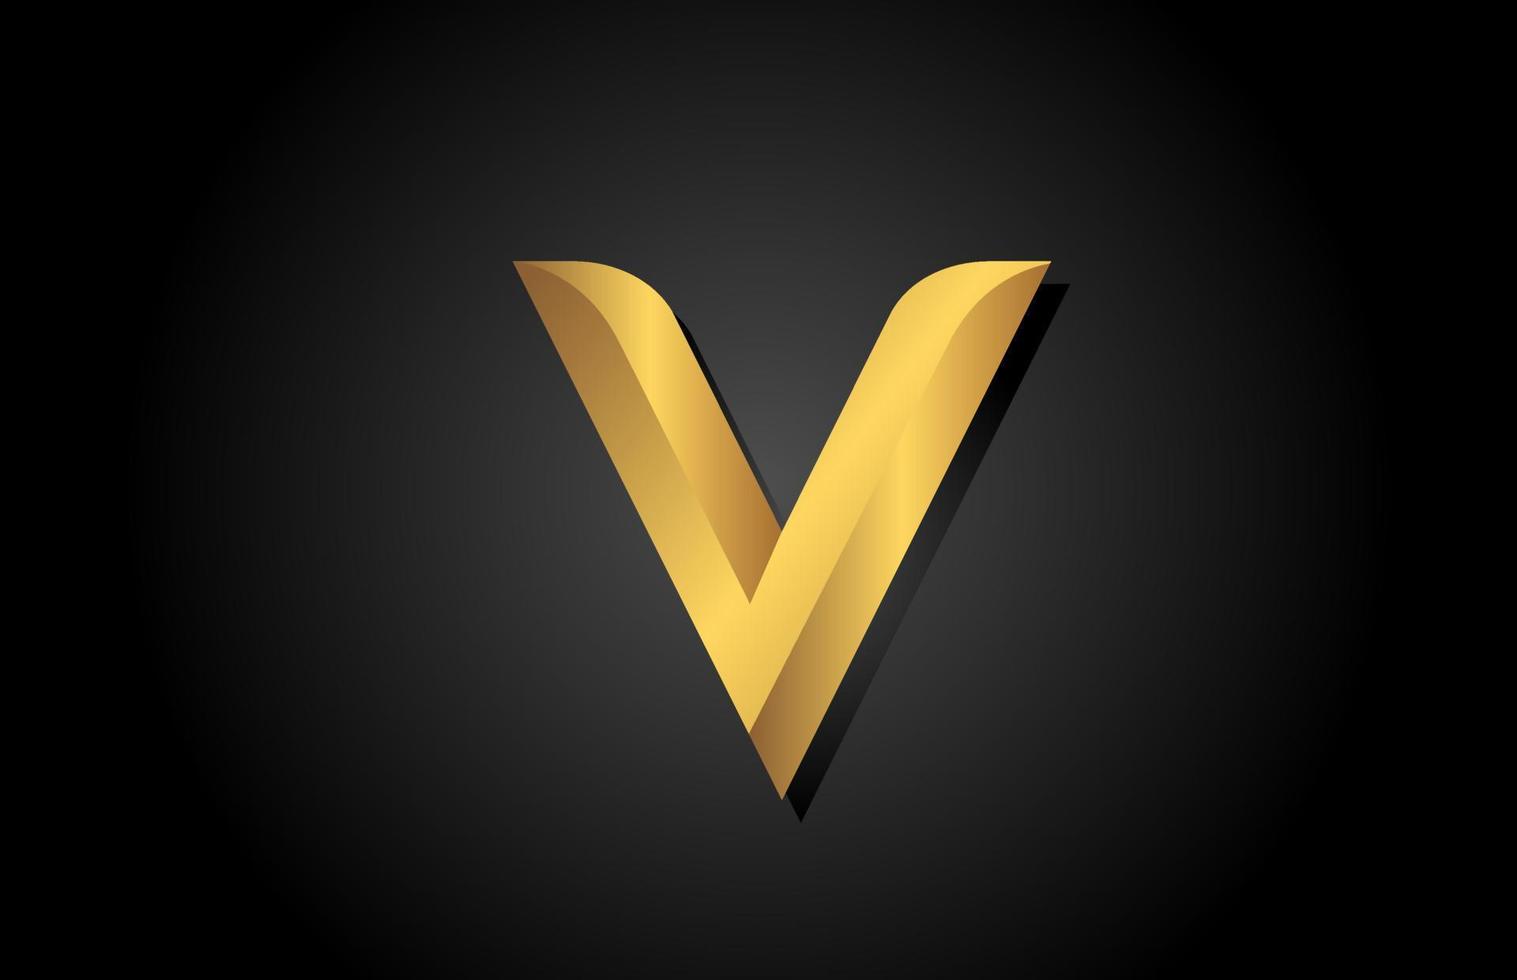 gold golden V alphabet letter logo icon design. Company template for luxury business vector